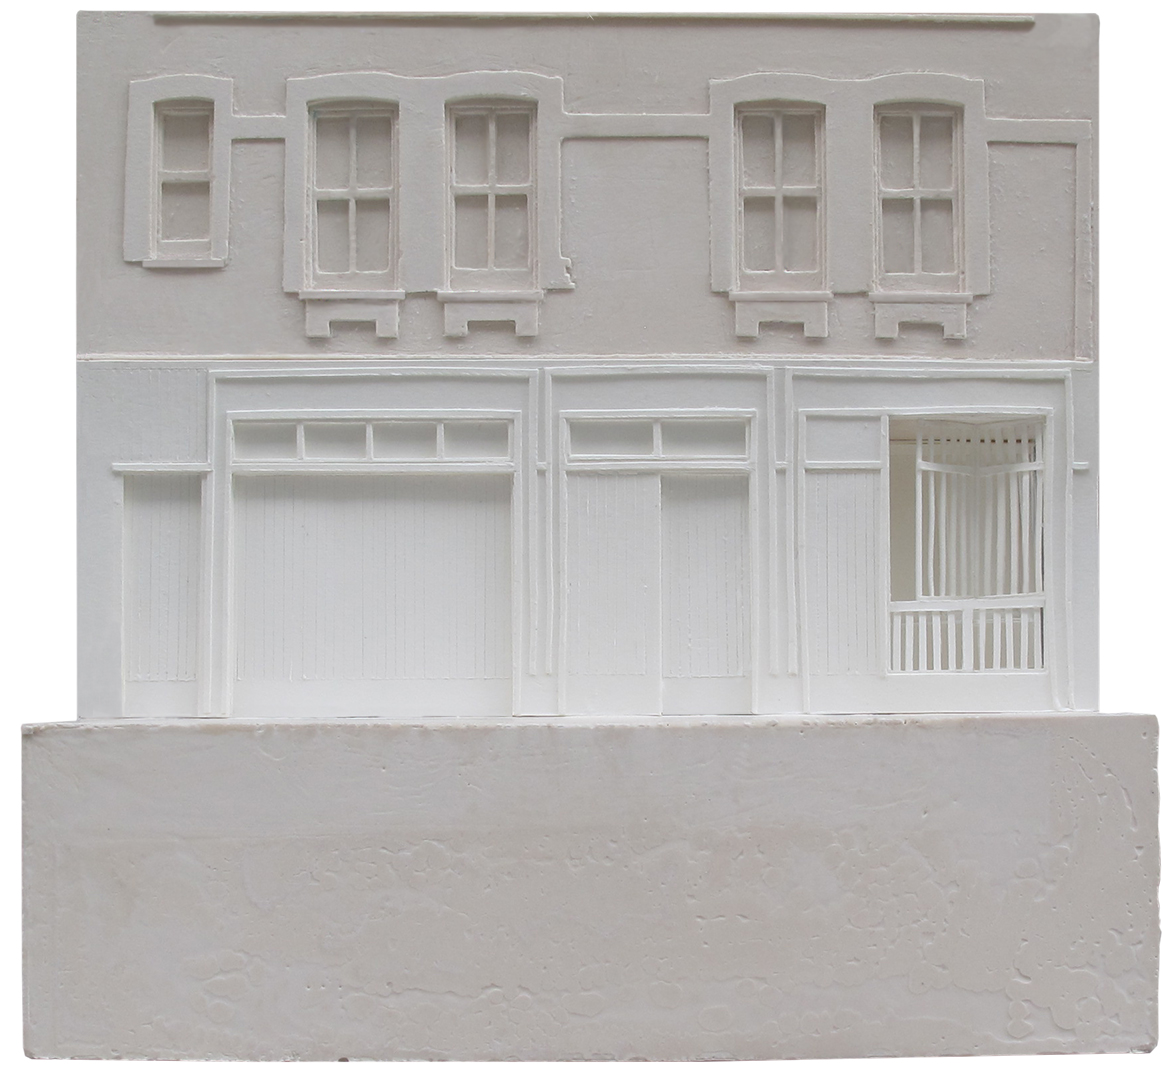 Marylebone Mews House: model